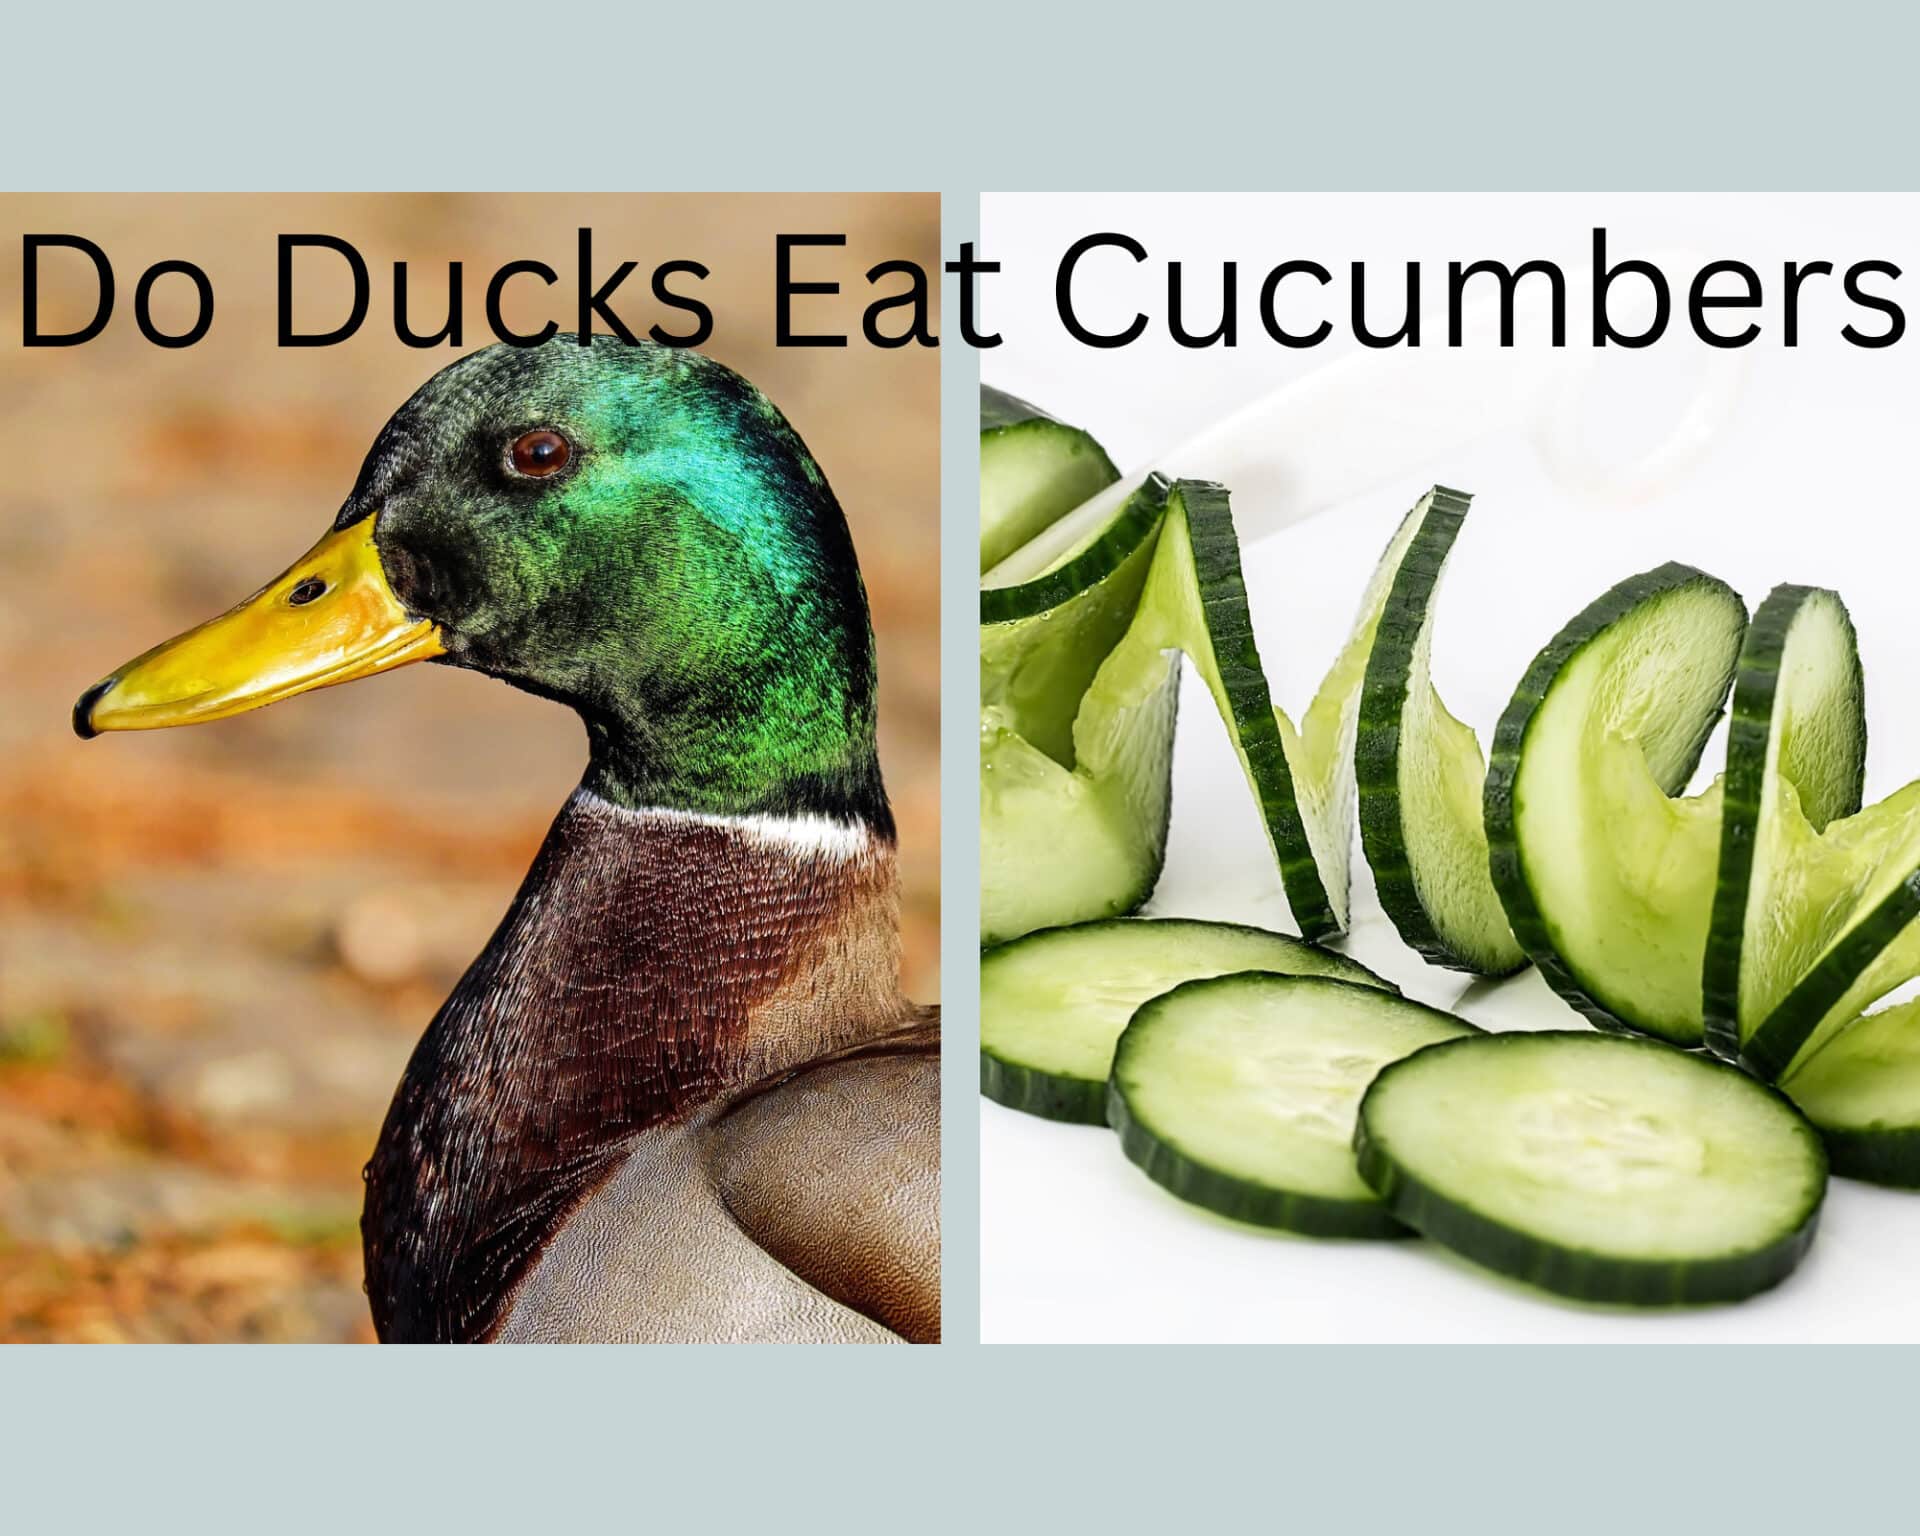 Can Ducks Eat Cucumbers? Is It Healthy?